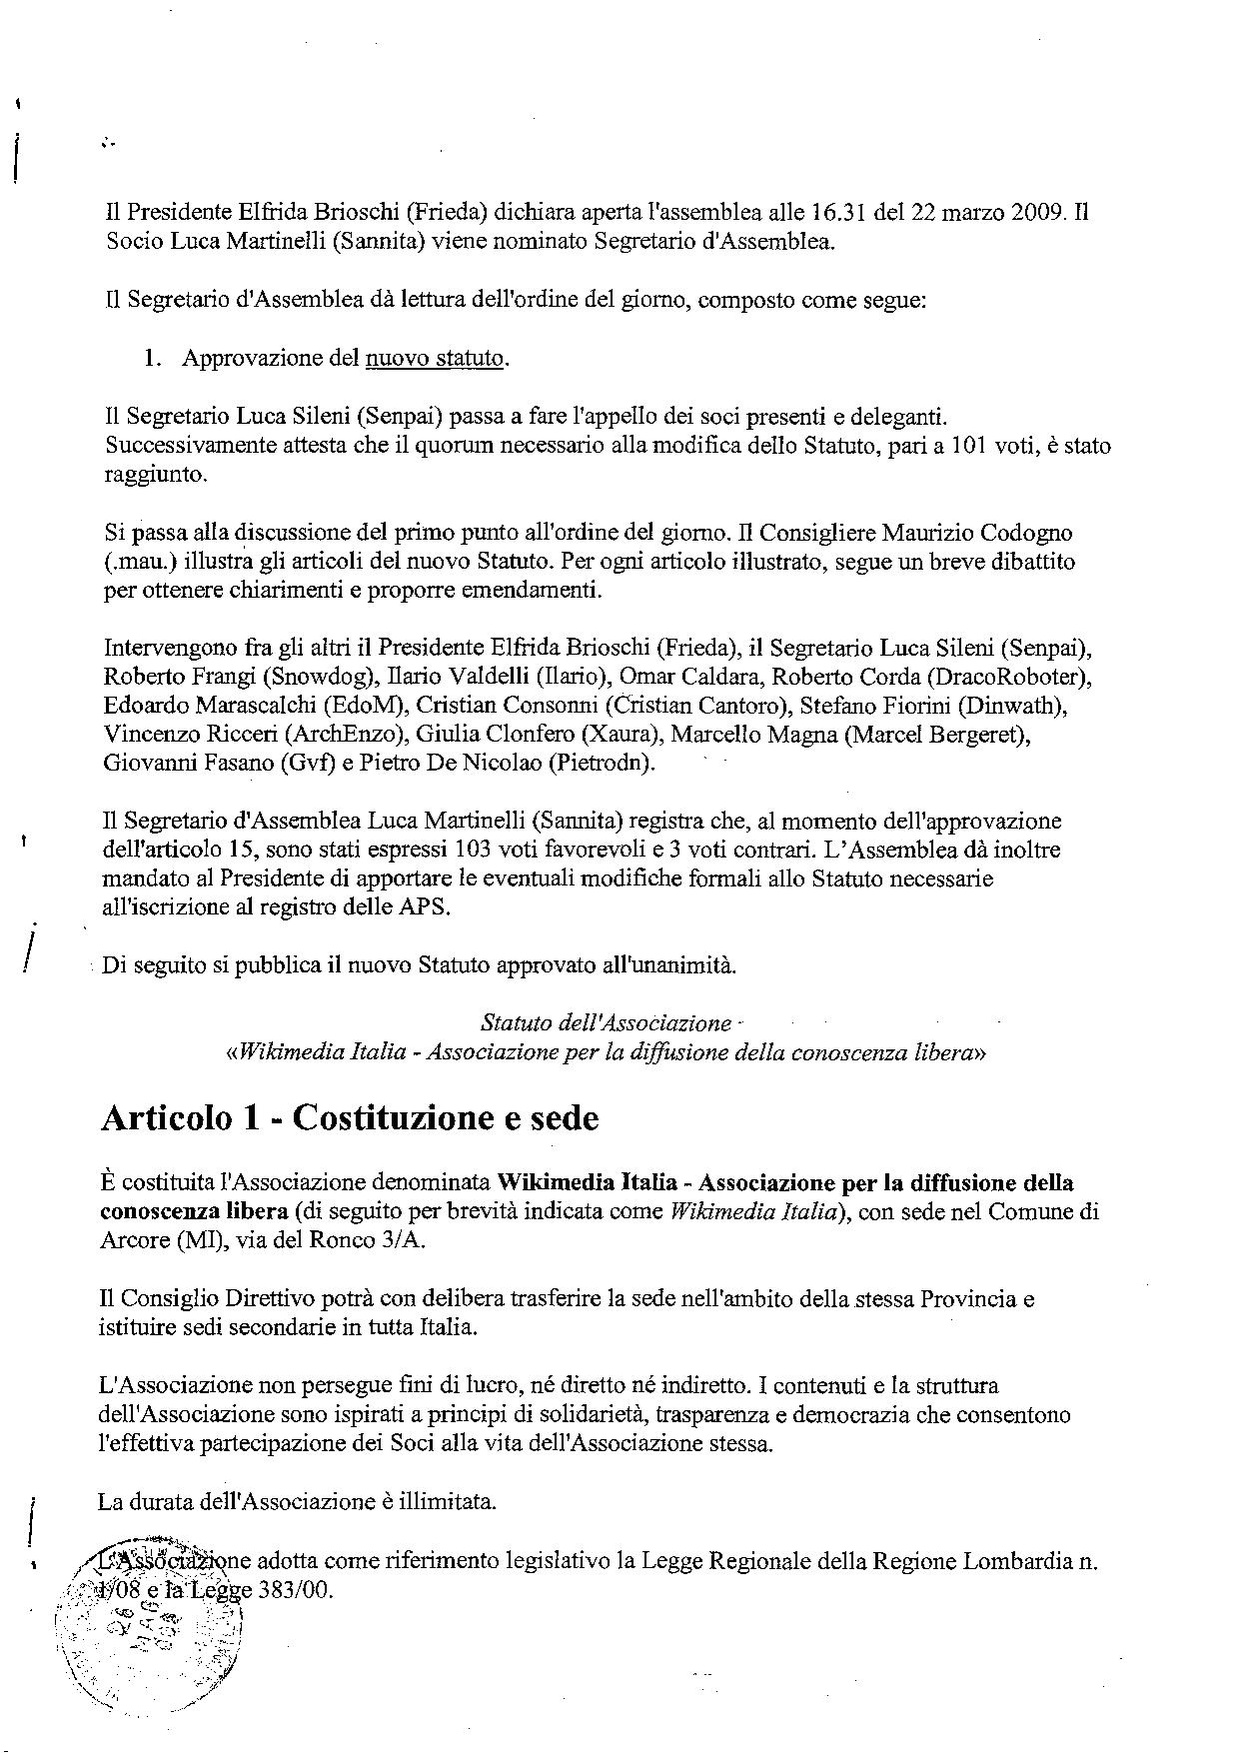 Italy Statuto 2009.pdf